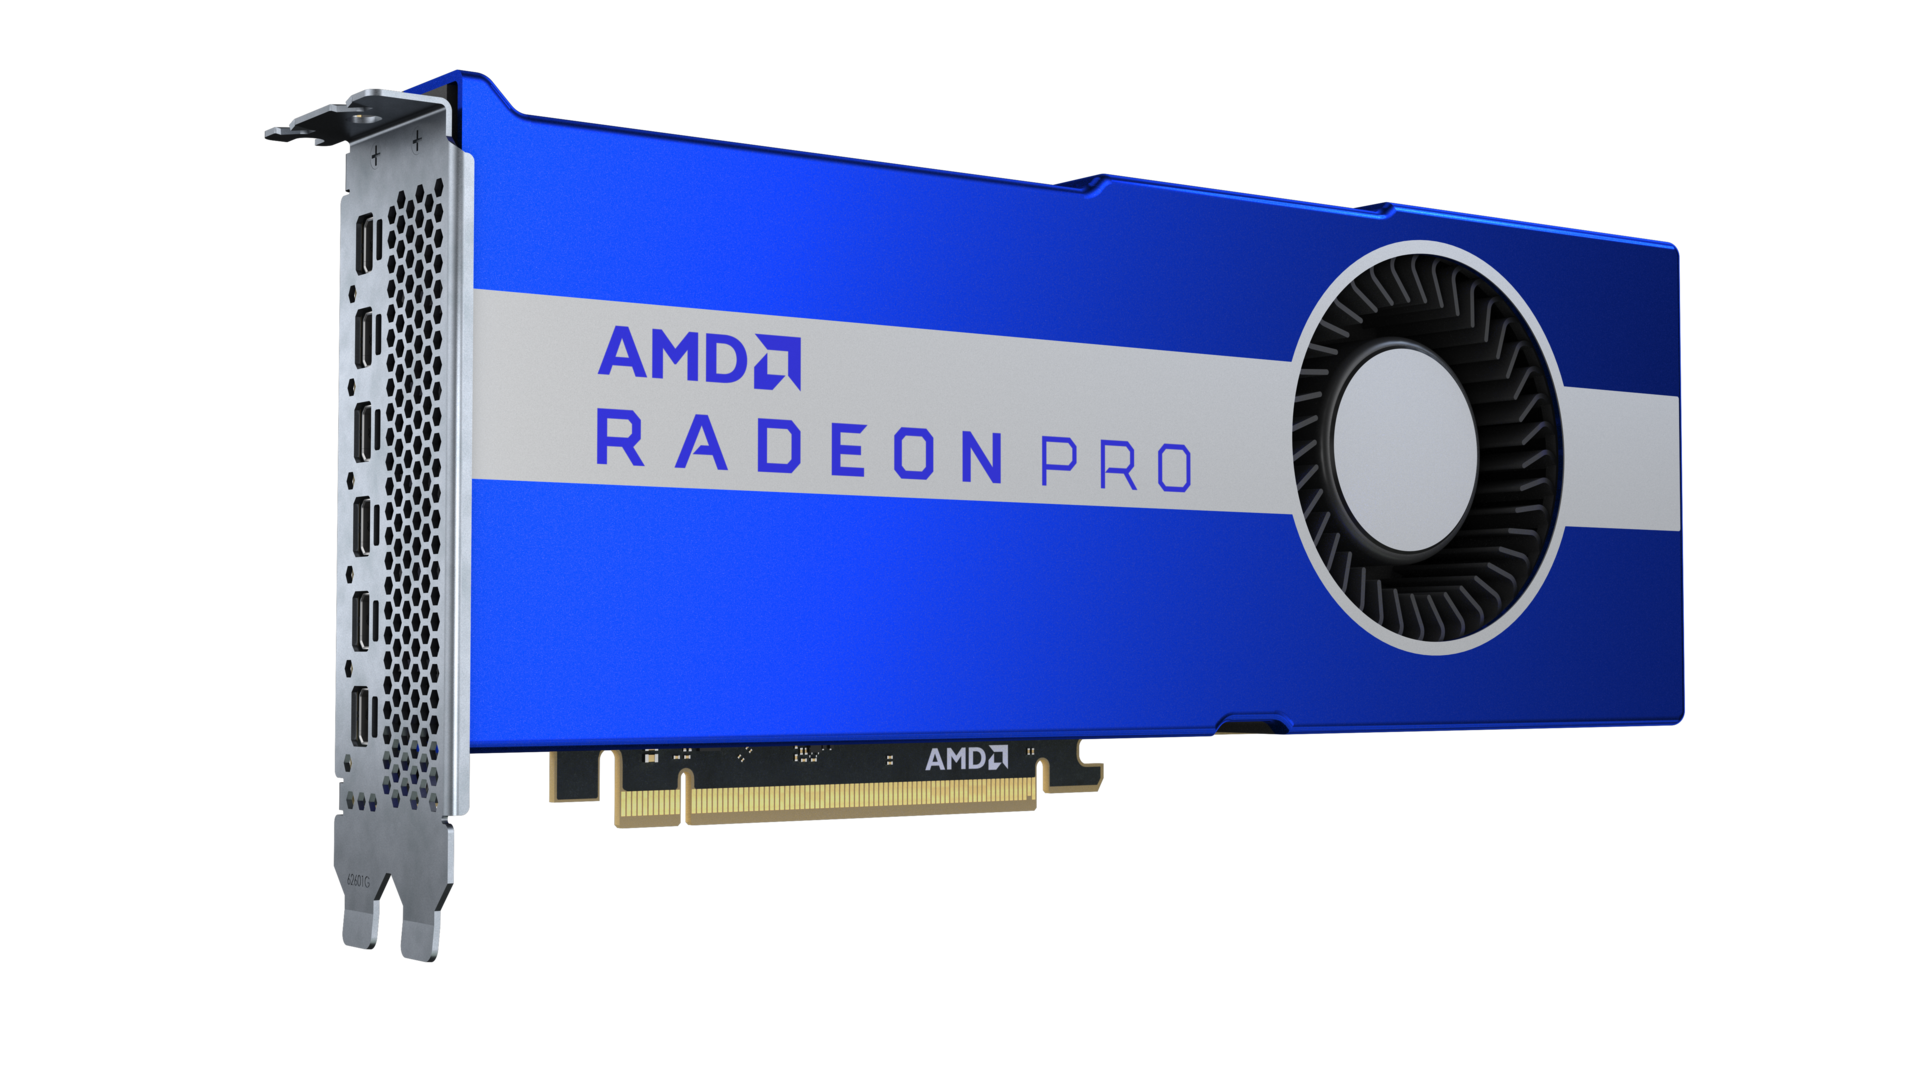 AMD announces the Radeon Pro VII as an 